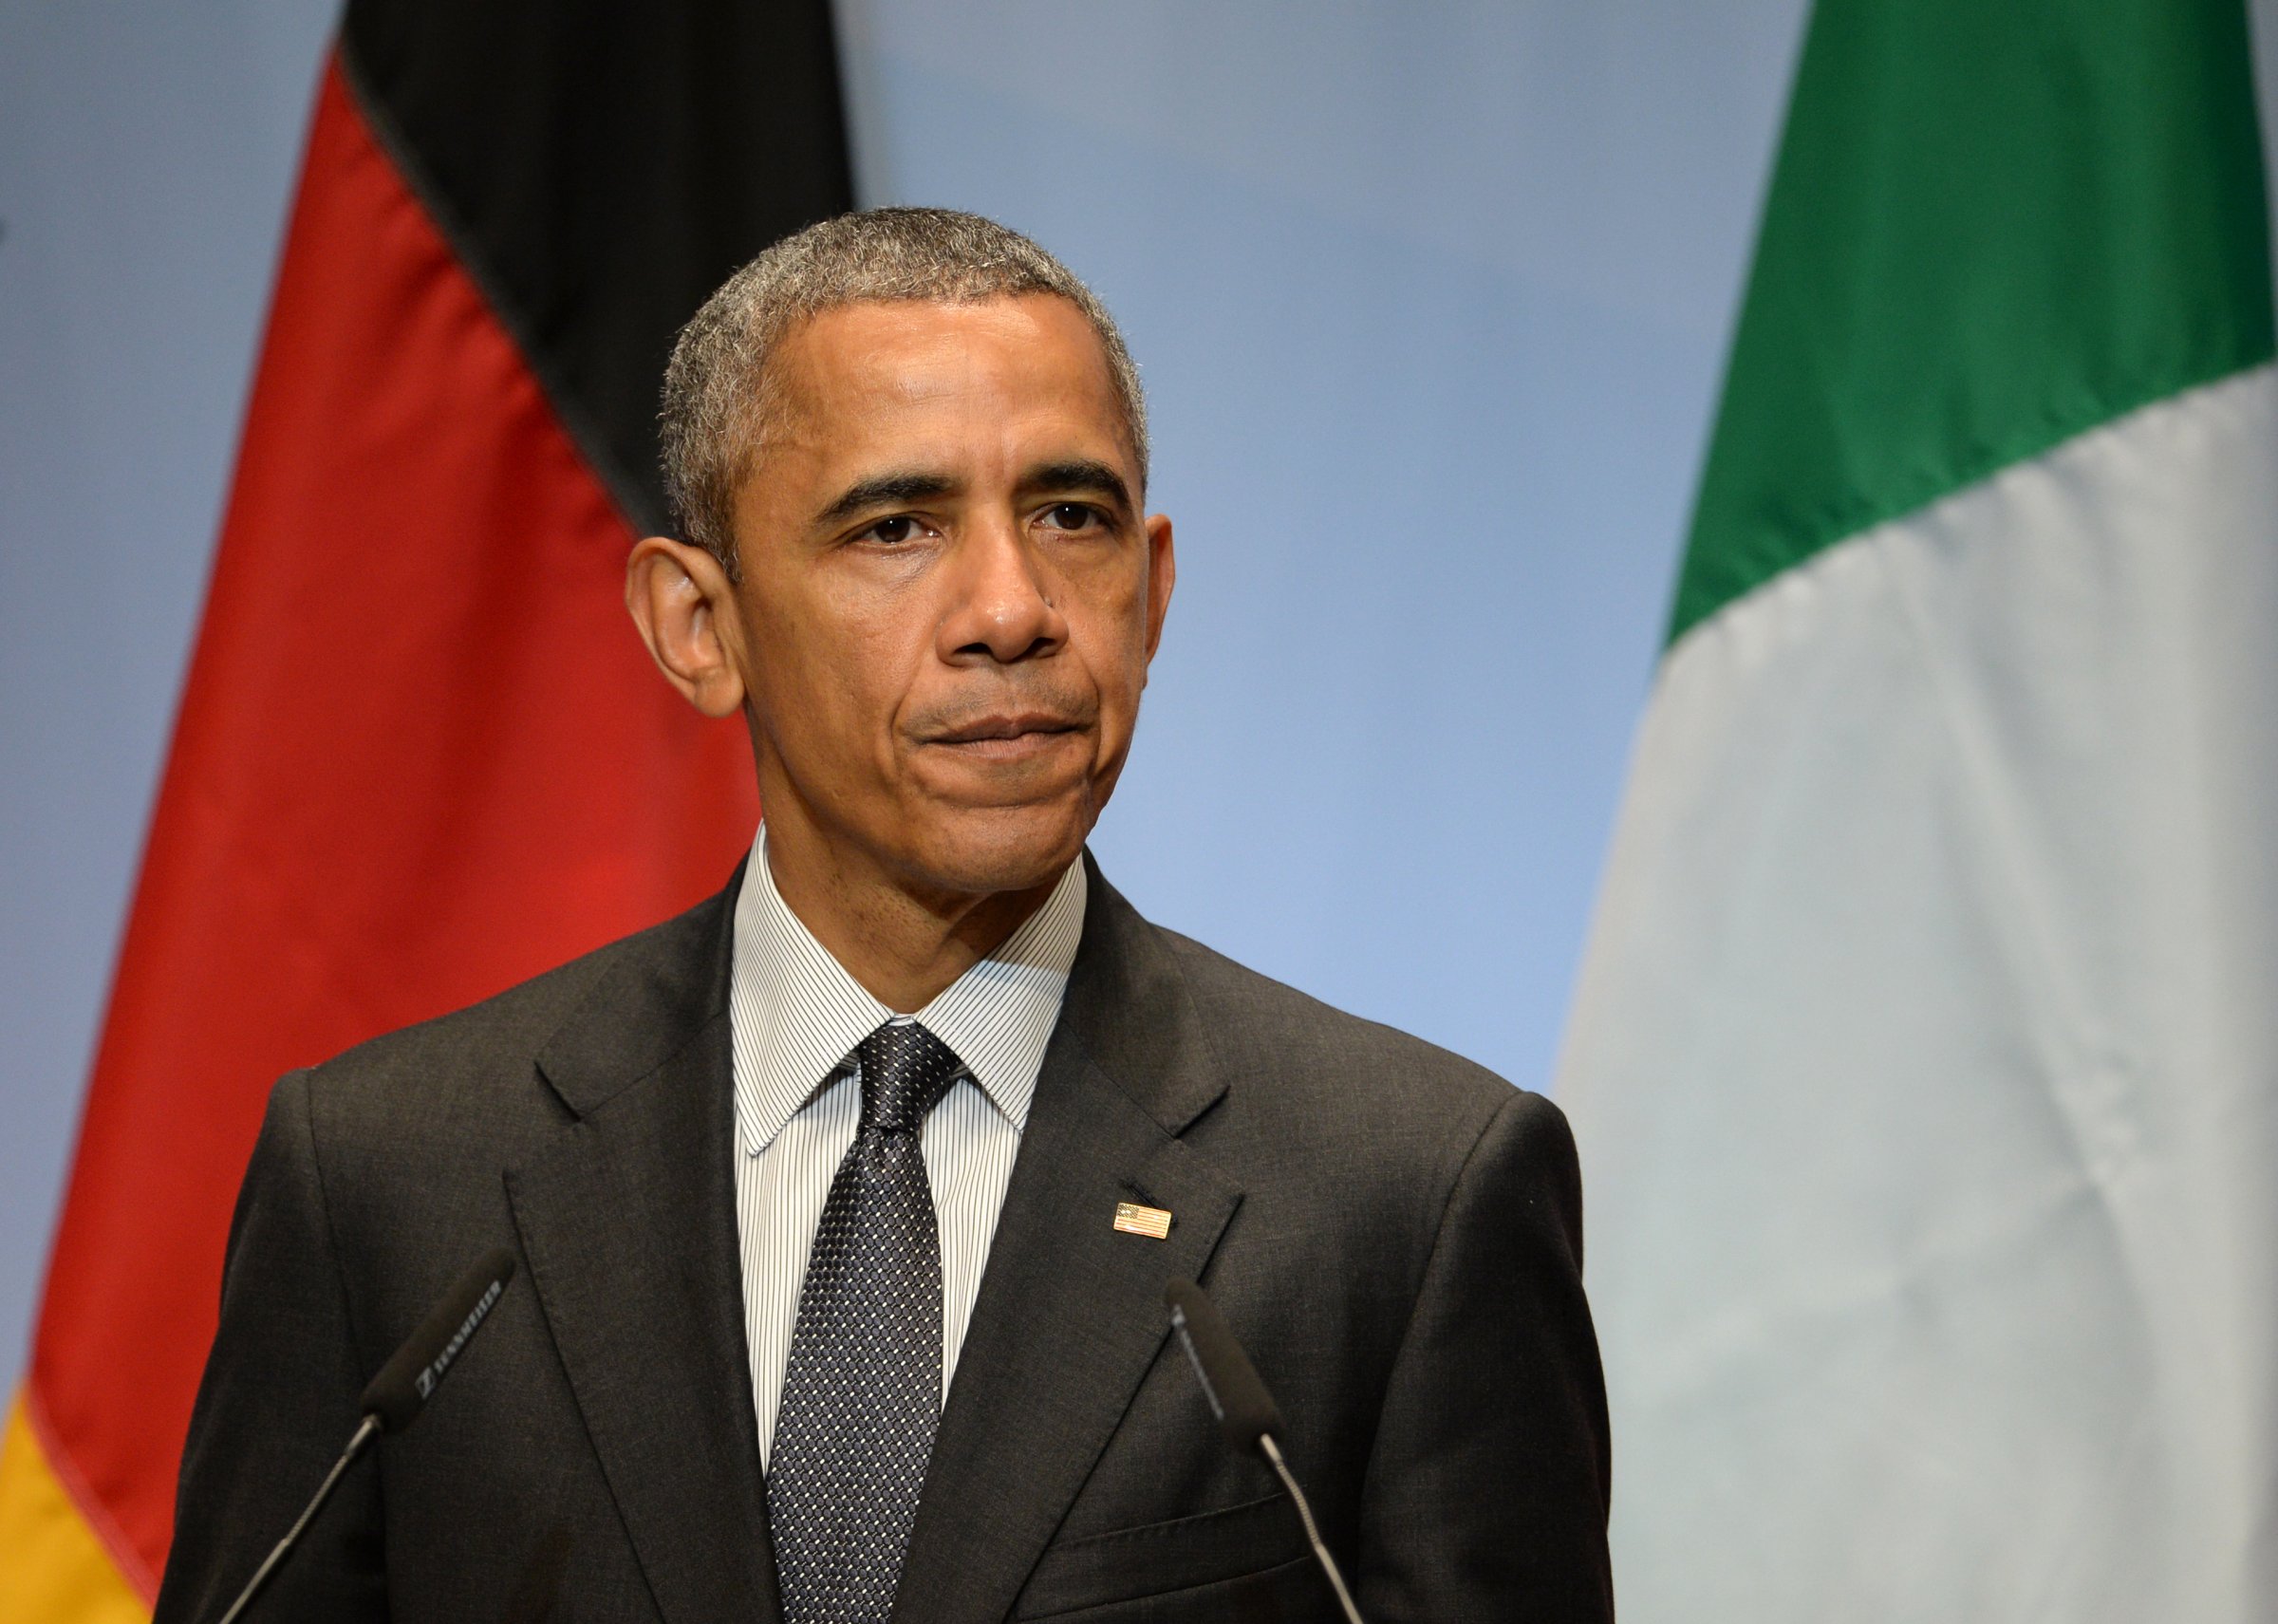 G7 Summit 2015 - Press conference - Obama